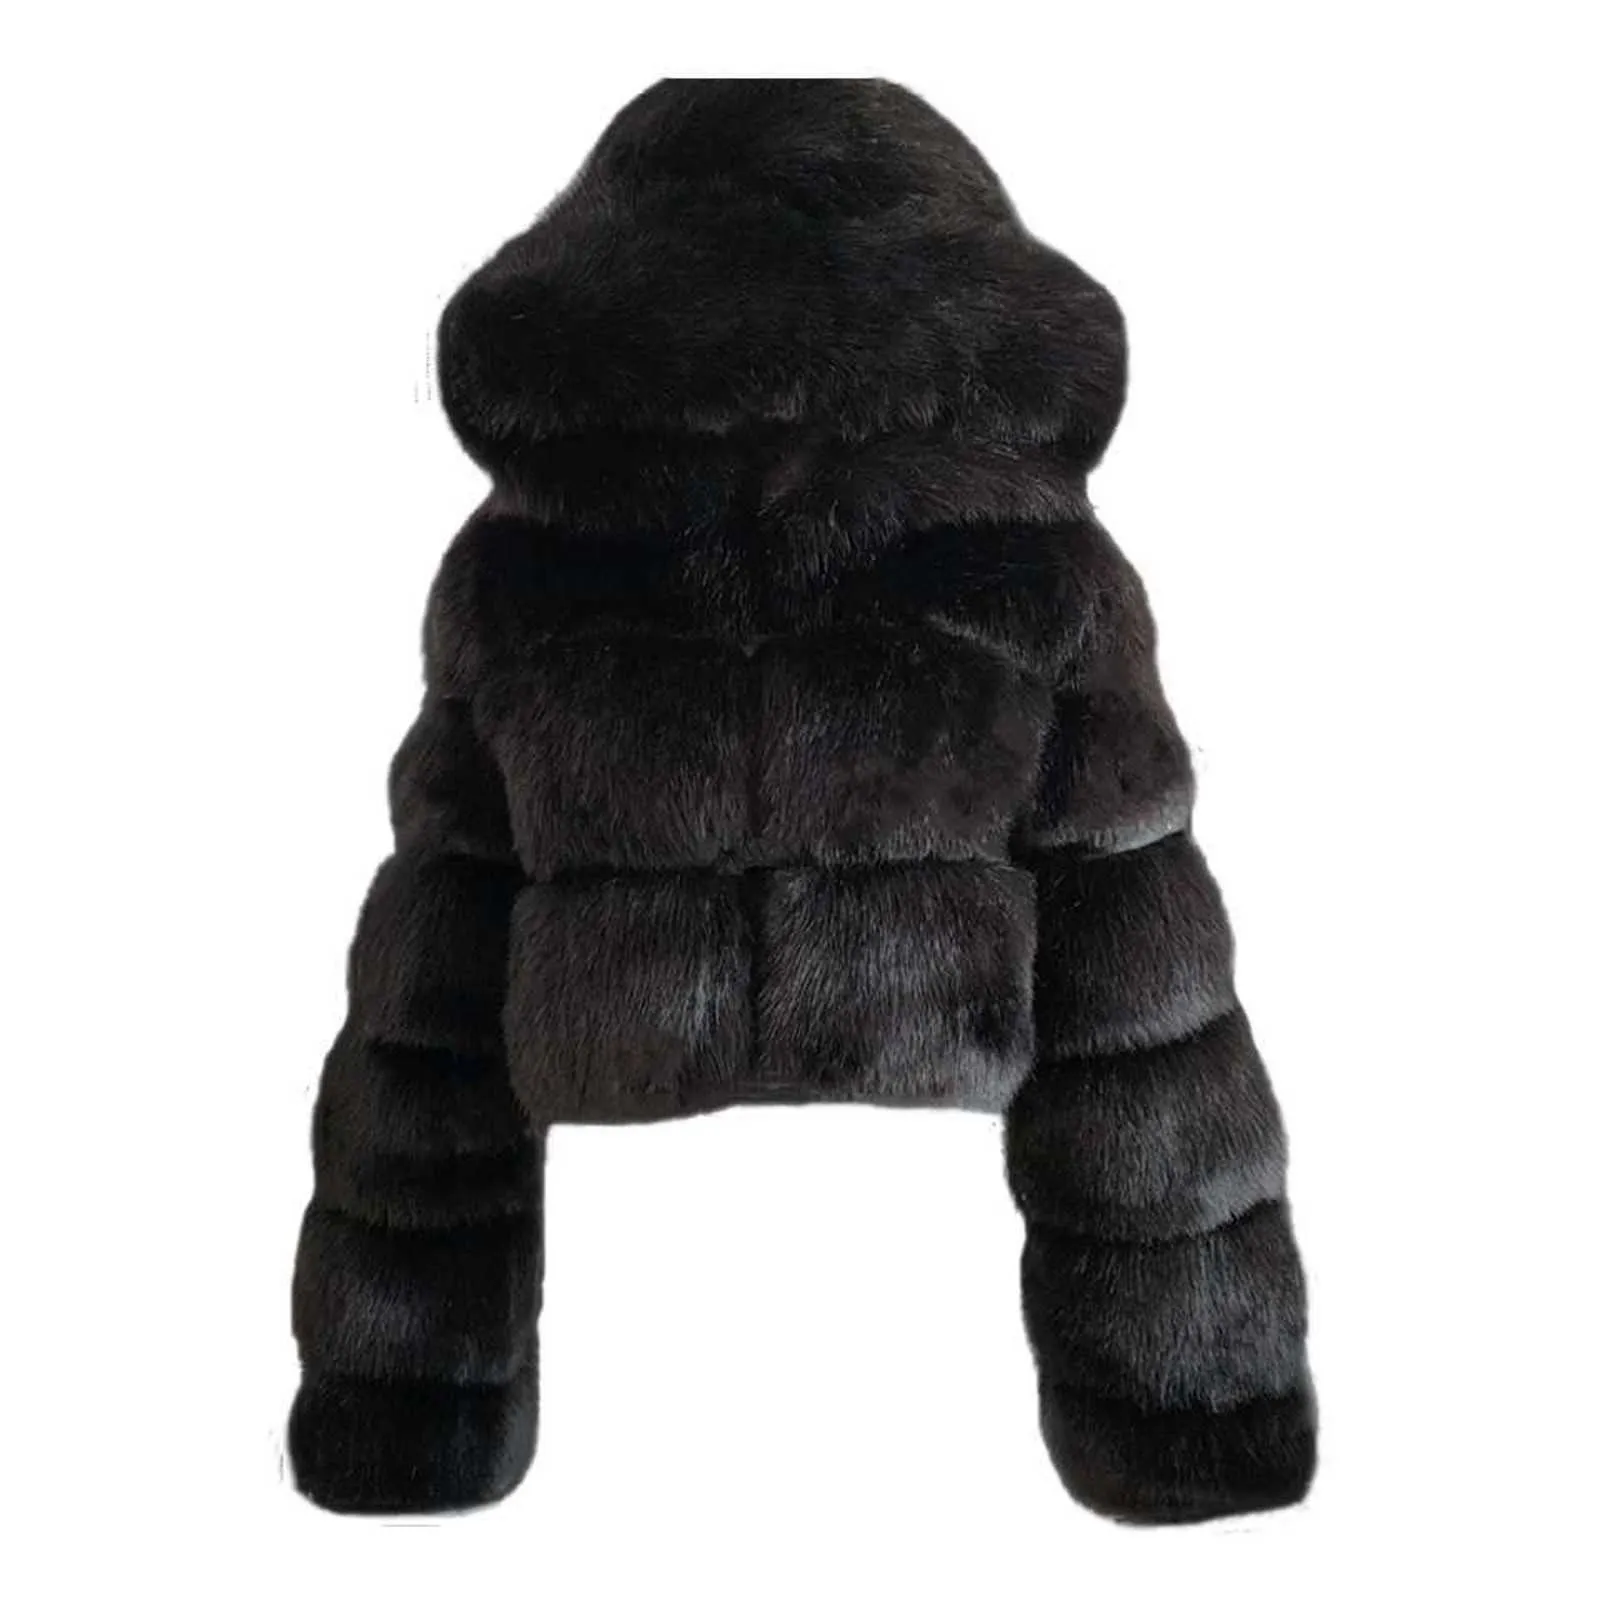 Cropped Fur Faux Fur Coats And Jackets Women Fluffy Top Coat With Hood Winter Fur Jacket Coat Manteau Femme 201016